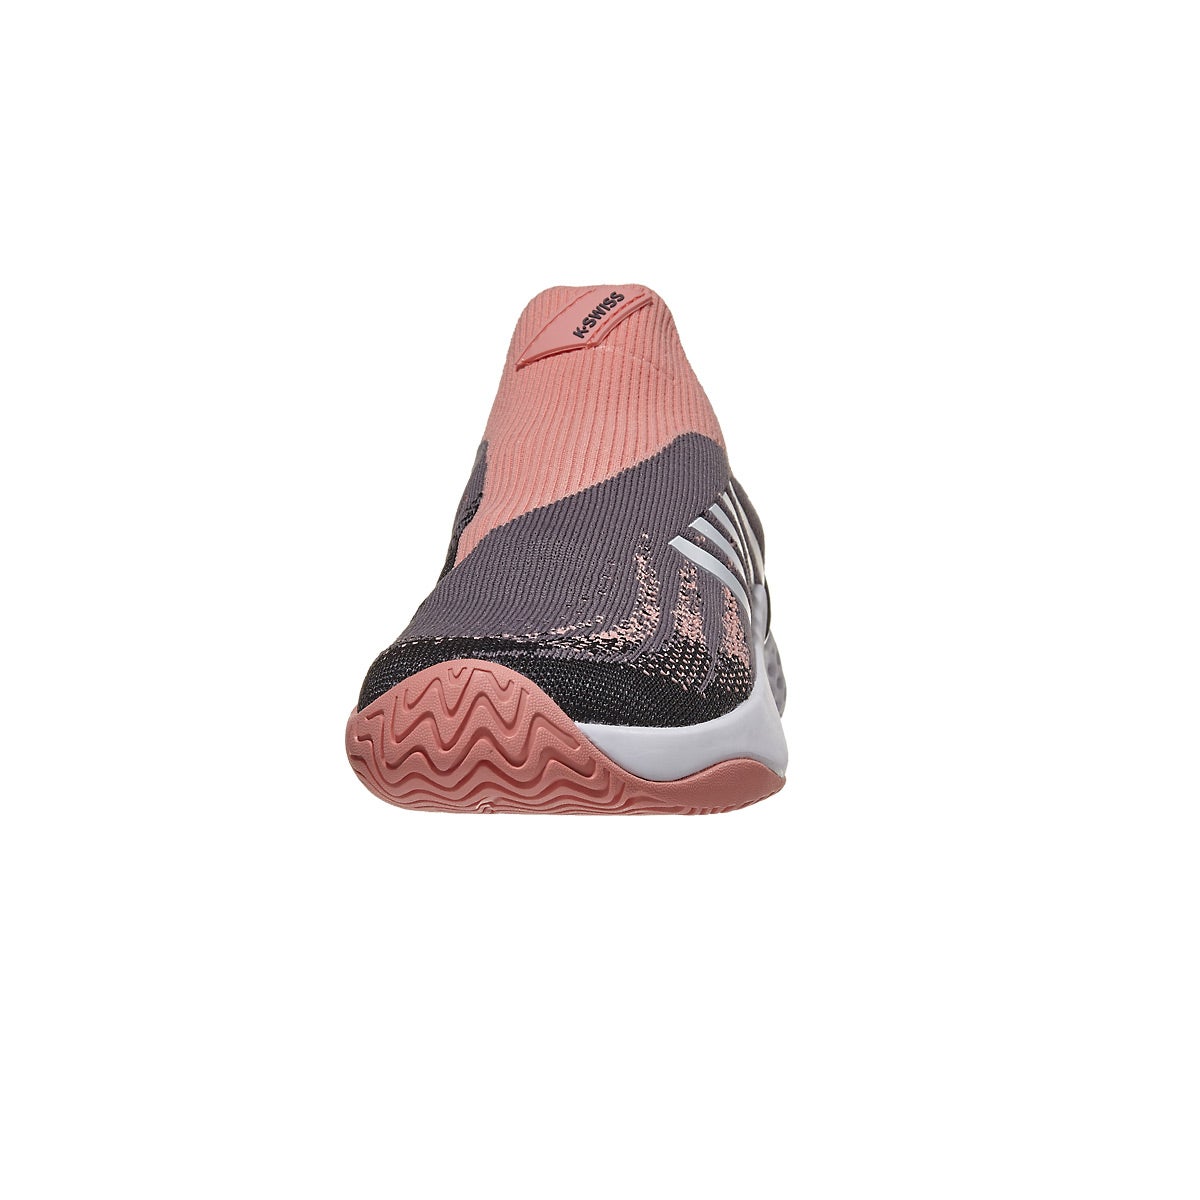 aero shoes website